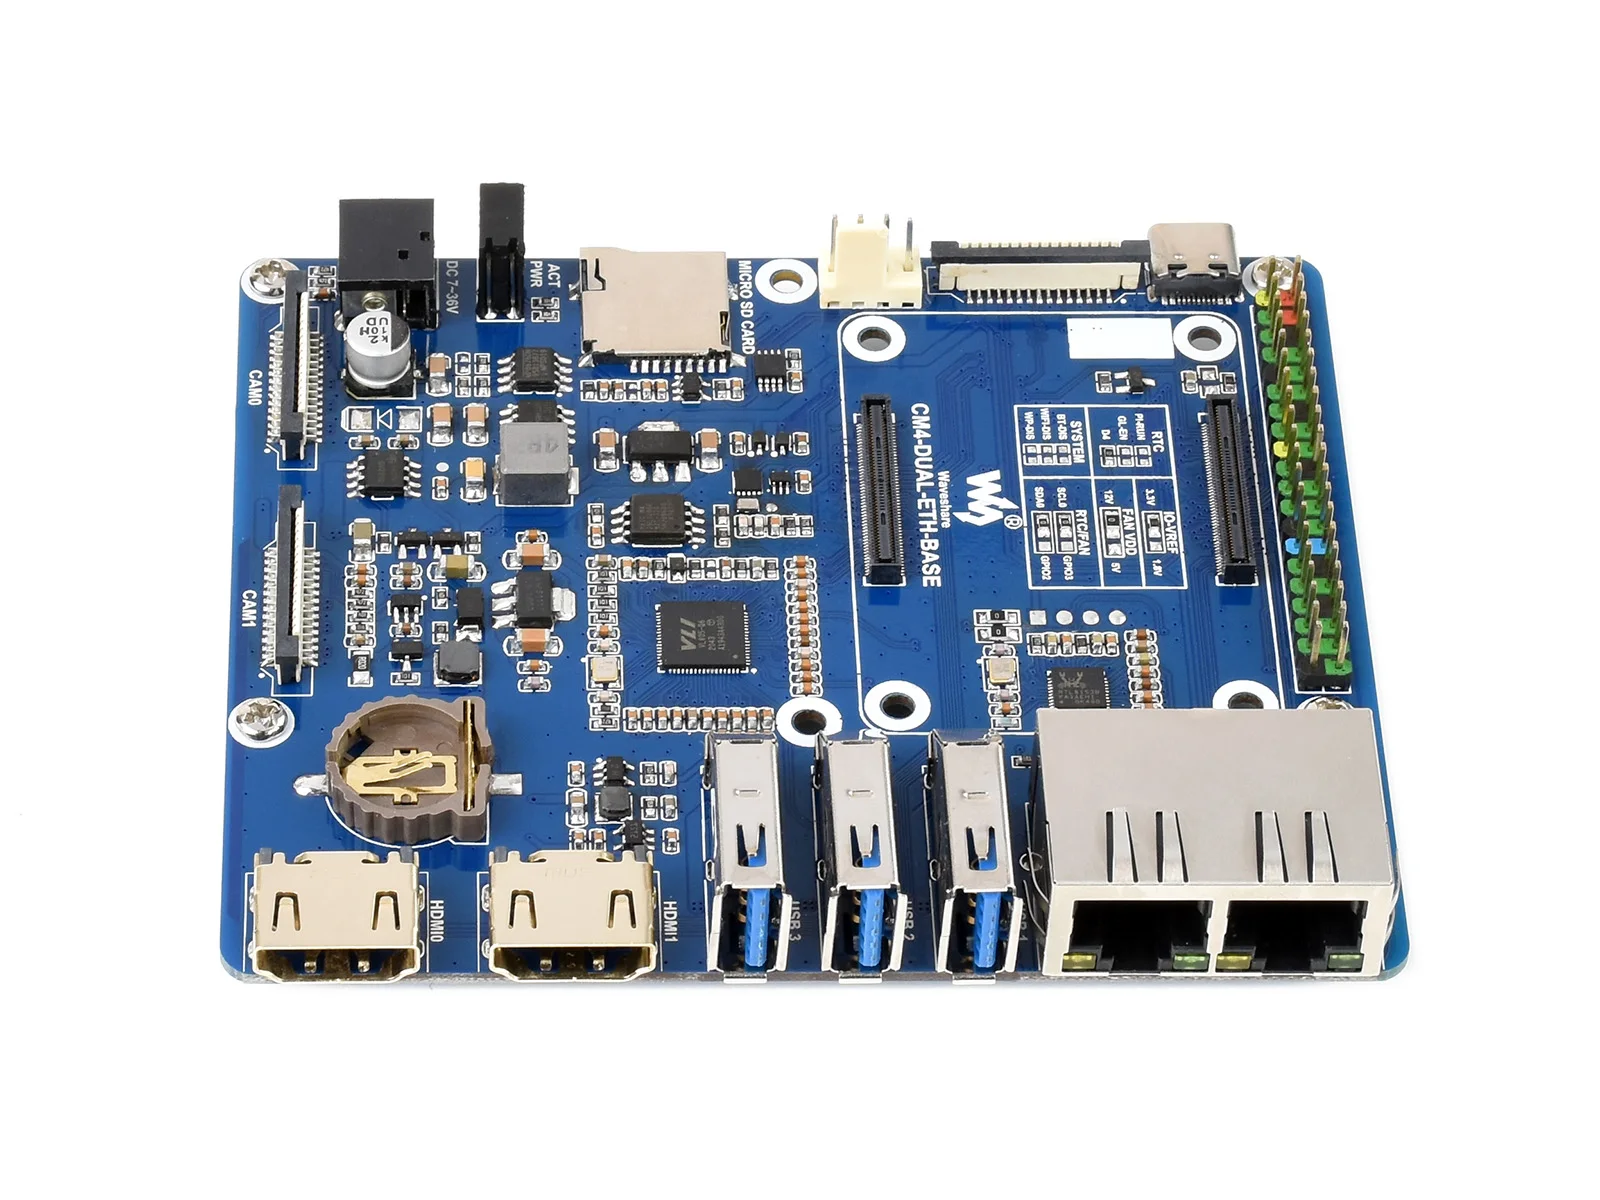 

Waveshare Dual Gigabit Ethernet Base Board Designed for Raspberry Pi Compute Module 4, Powerful Ethernet Capability